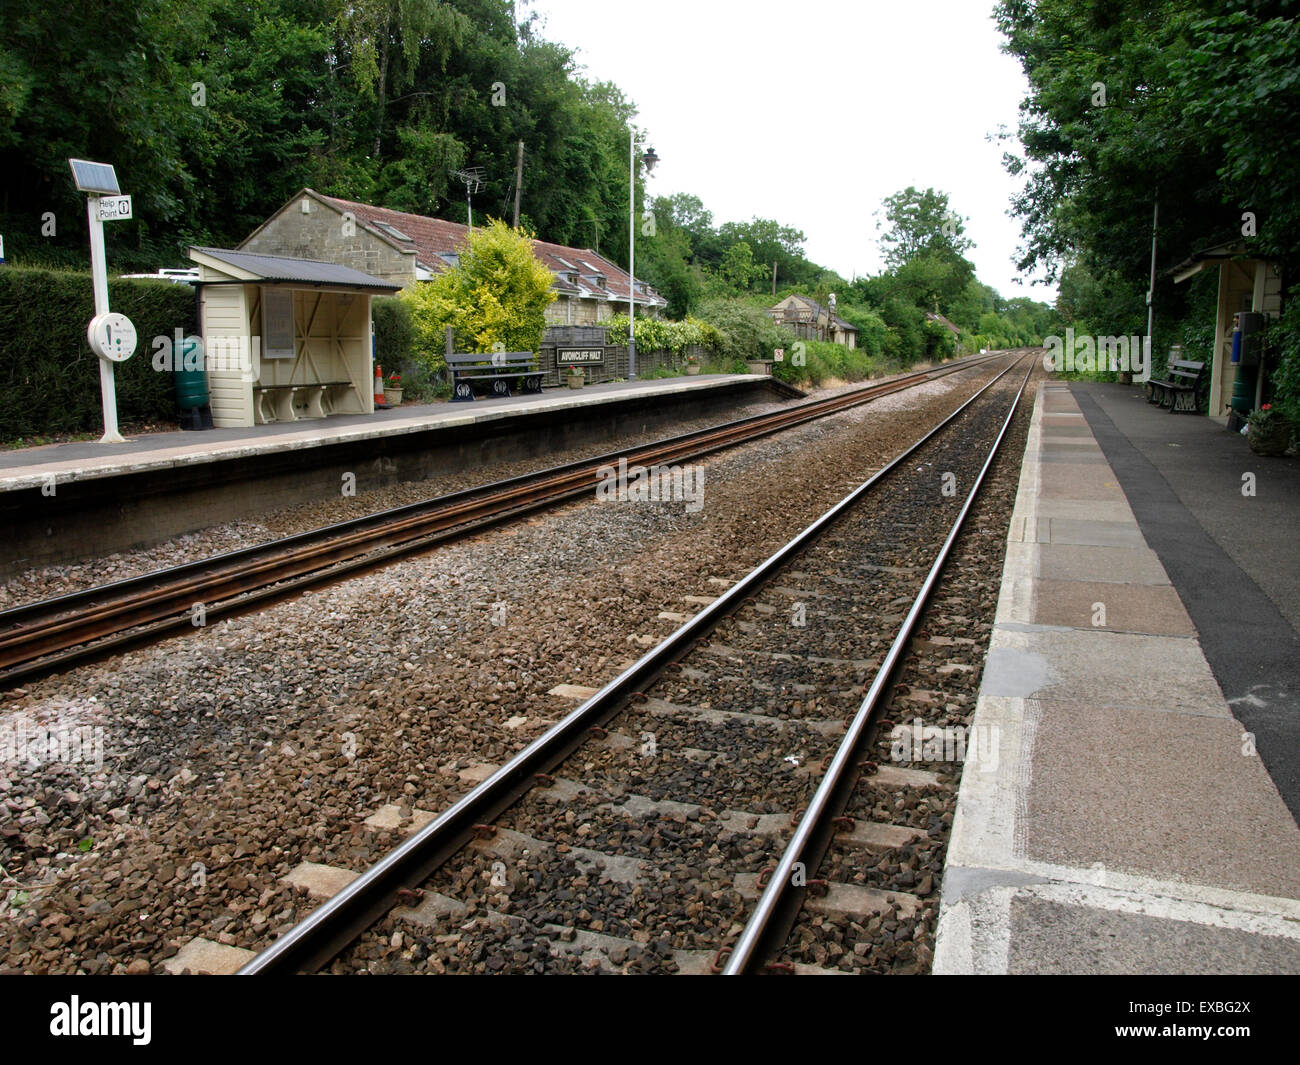 Avoncliff Halt railway station, Bradford on Avon, Wiltshire, UK Stock Photo